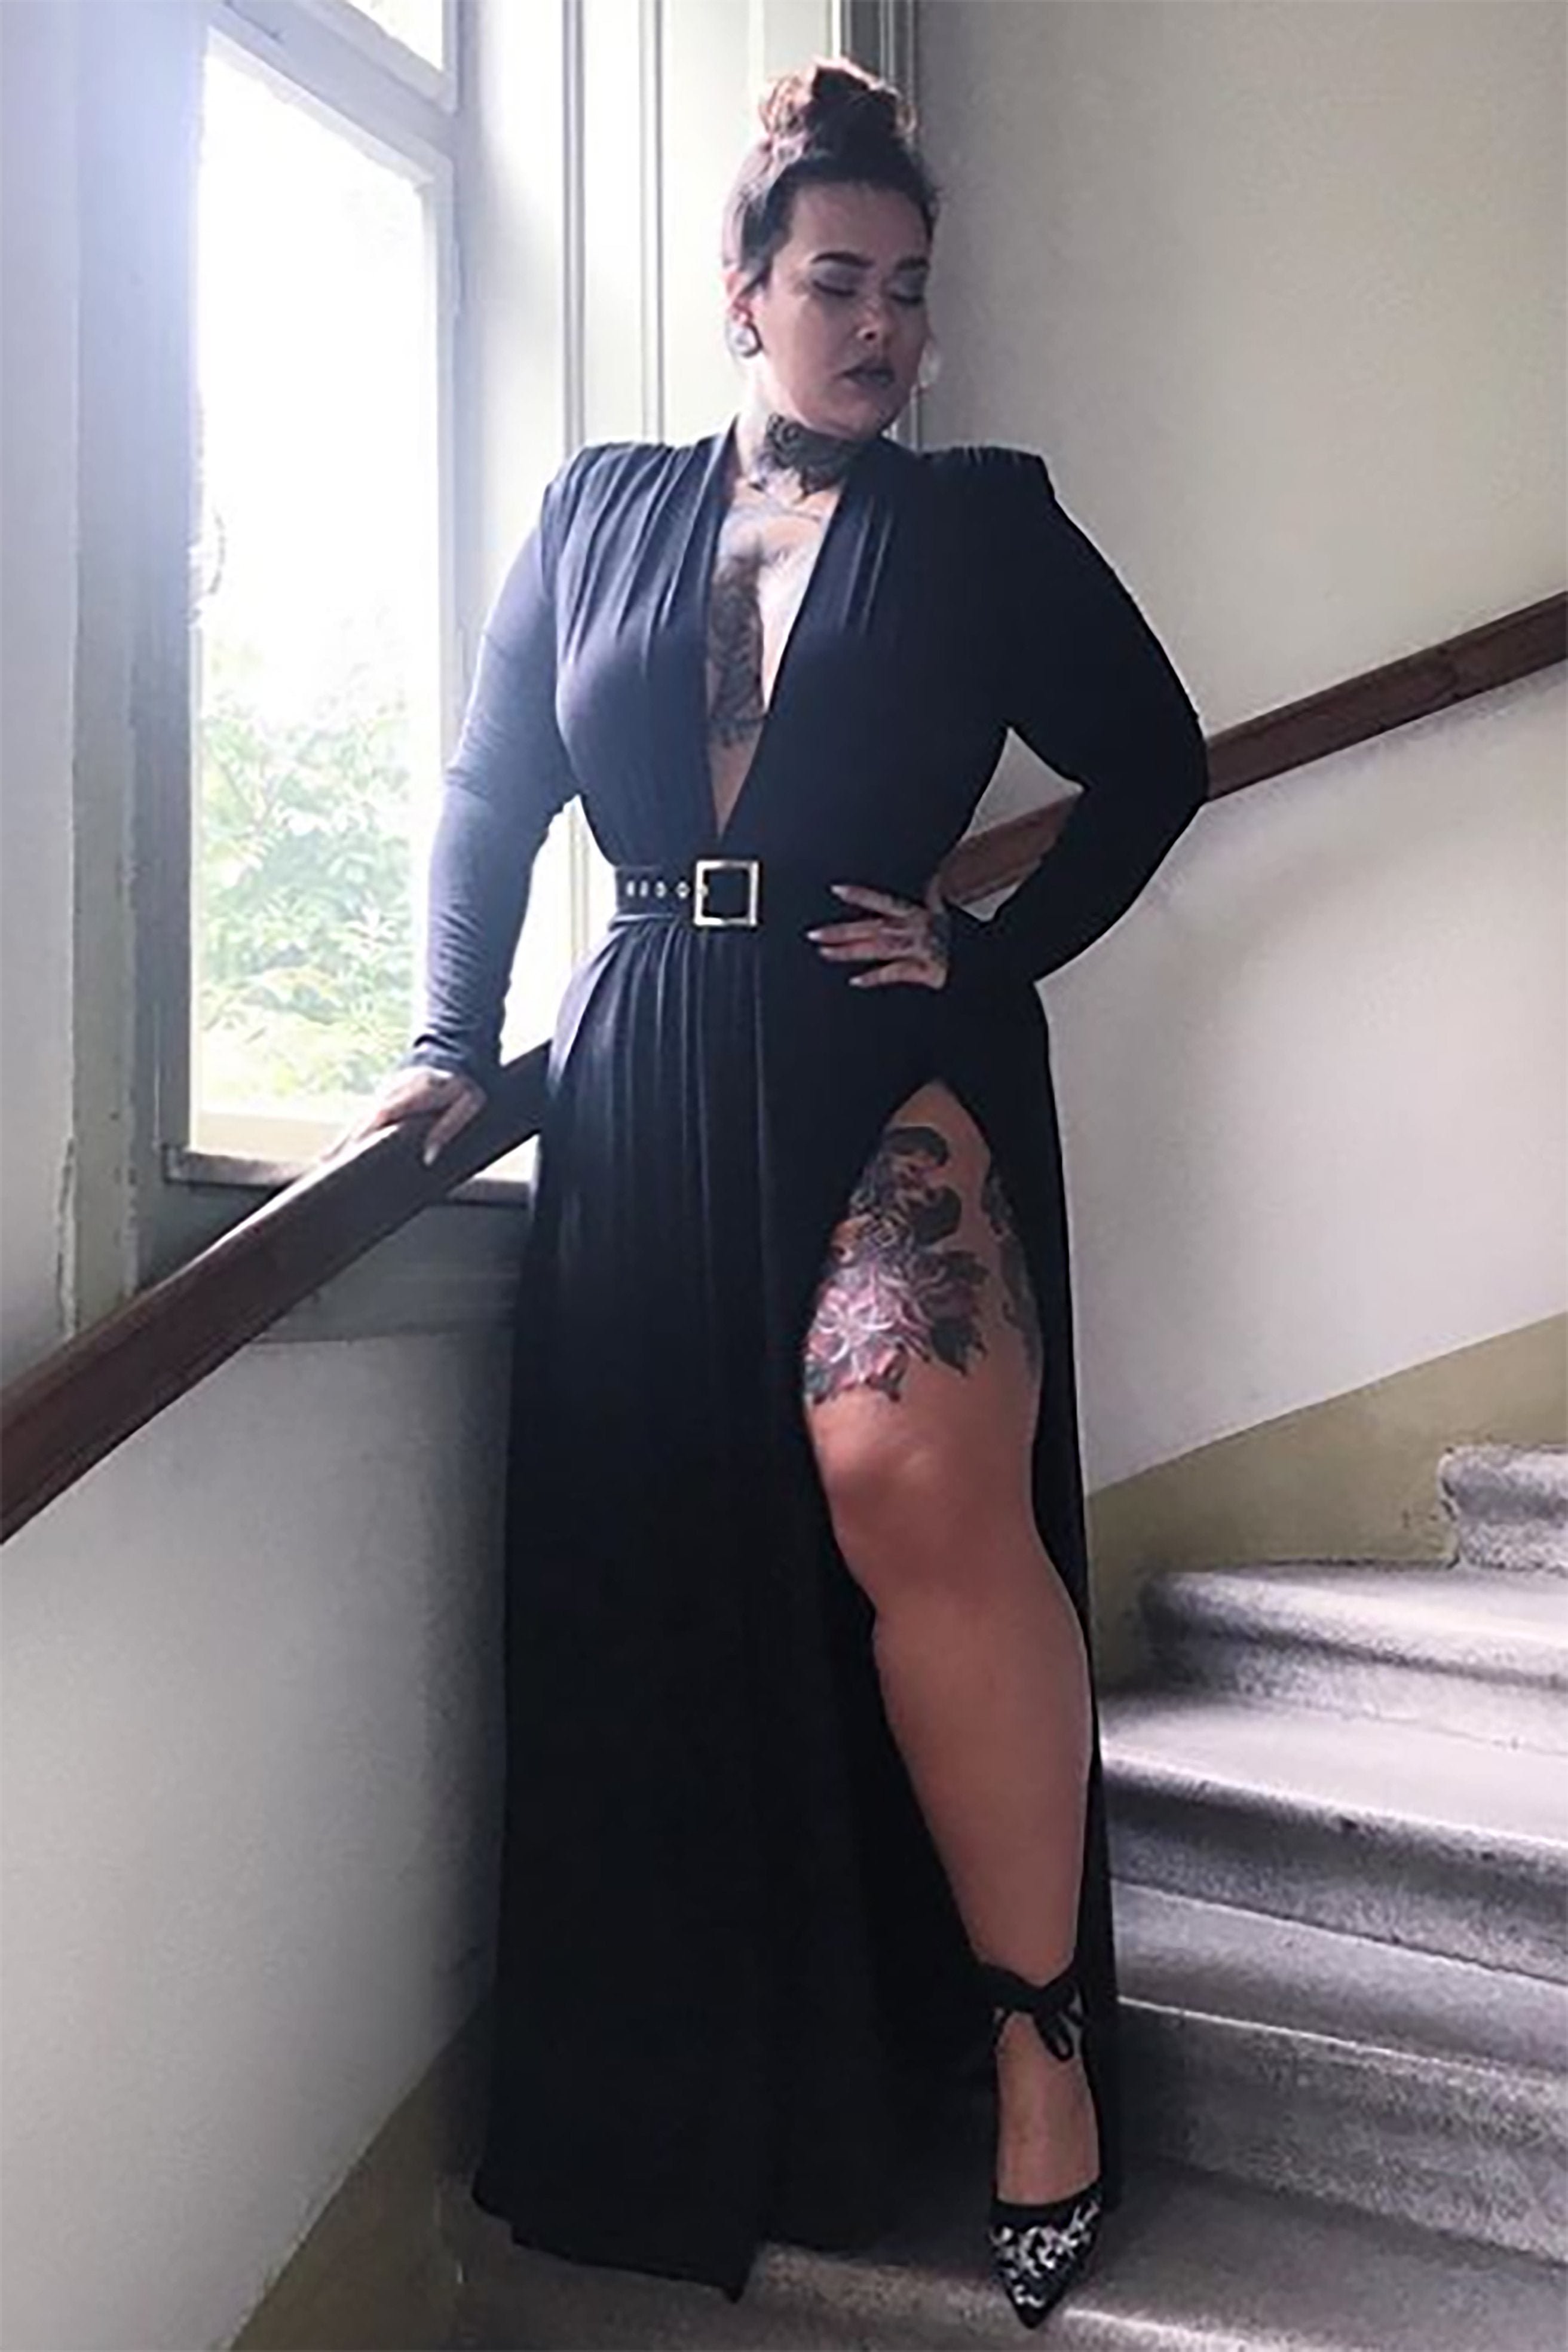 Spree Dress - Black from Fashion Nova on 21 Buttons